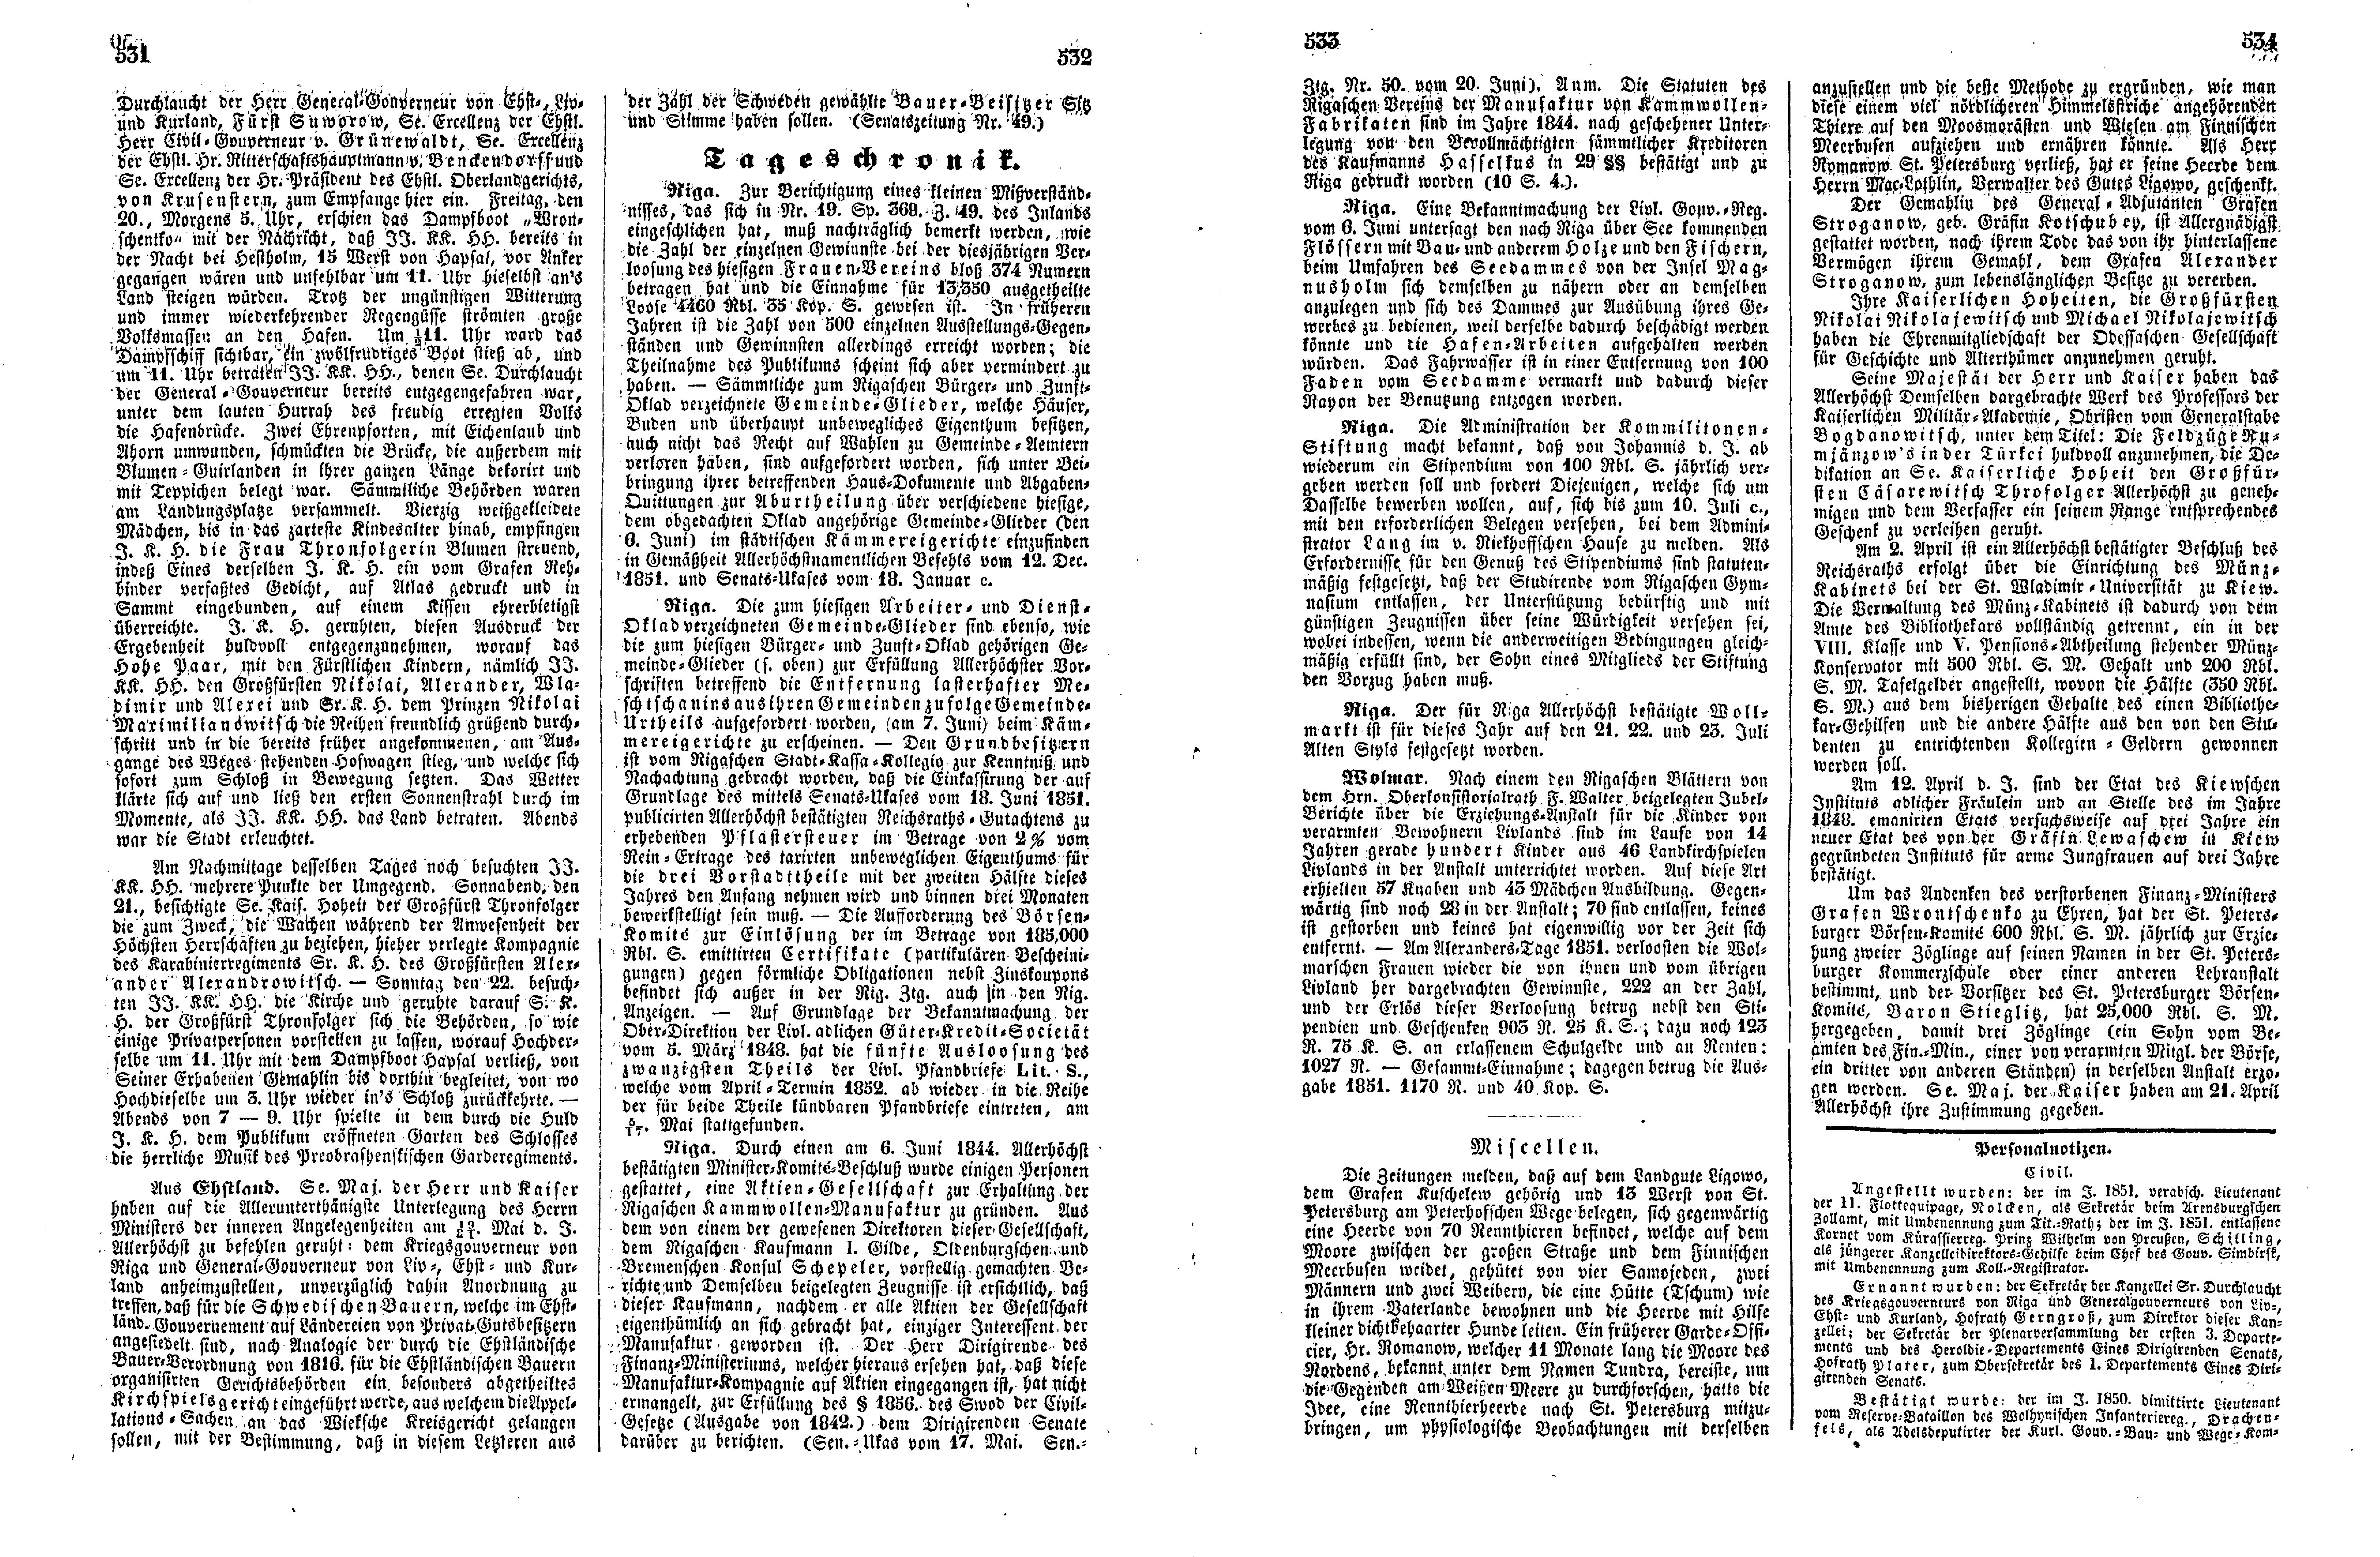 Das Inland [17] (1852) | 138. (531-534) Main body of text